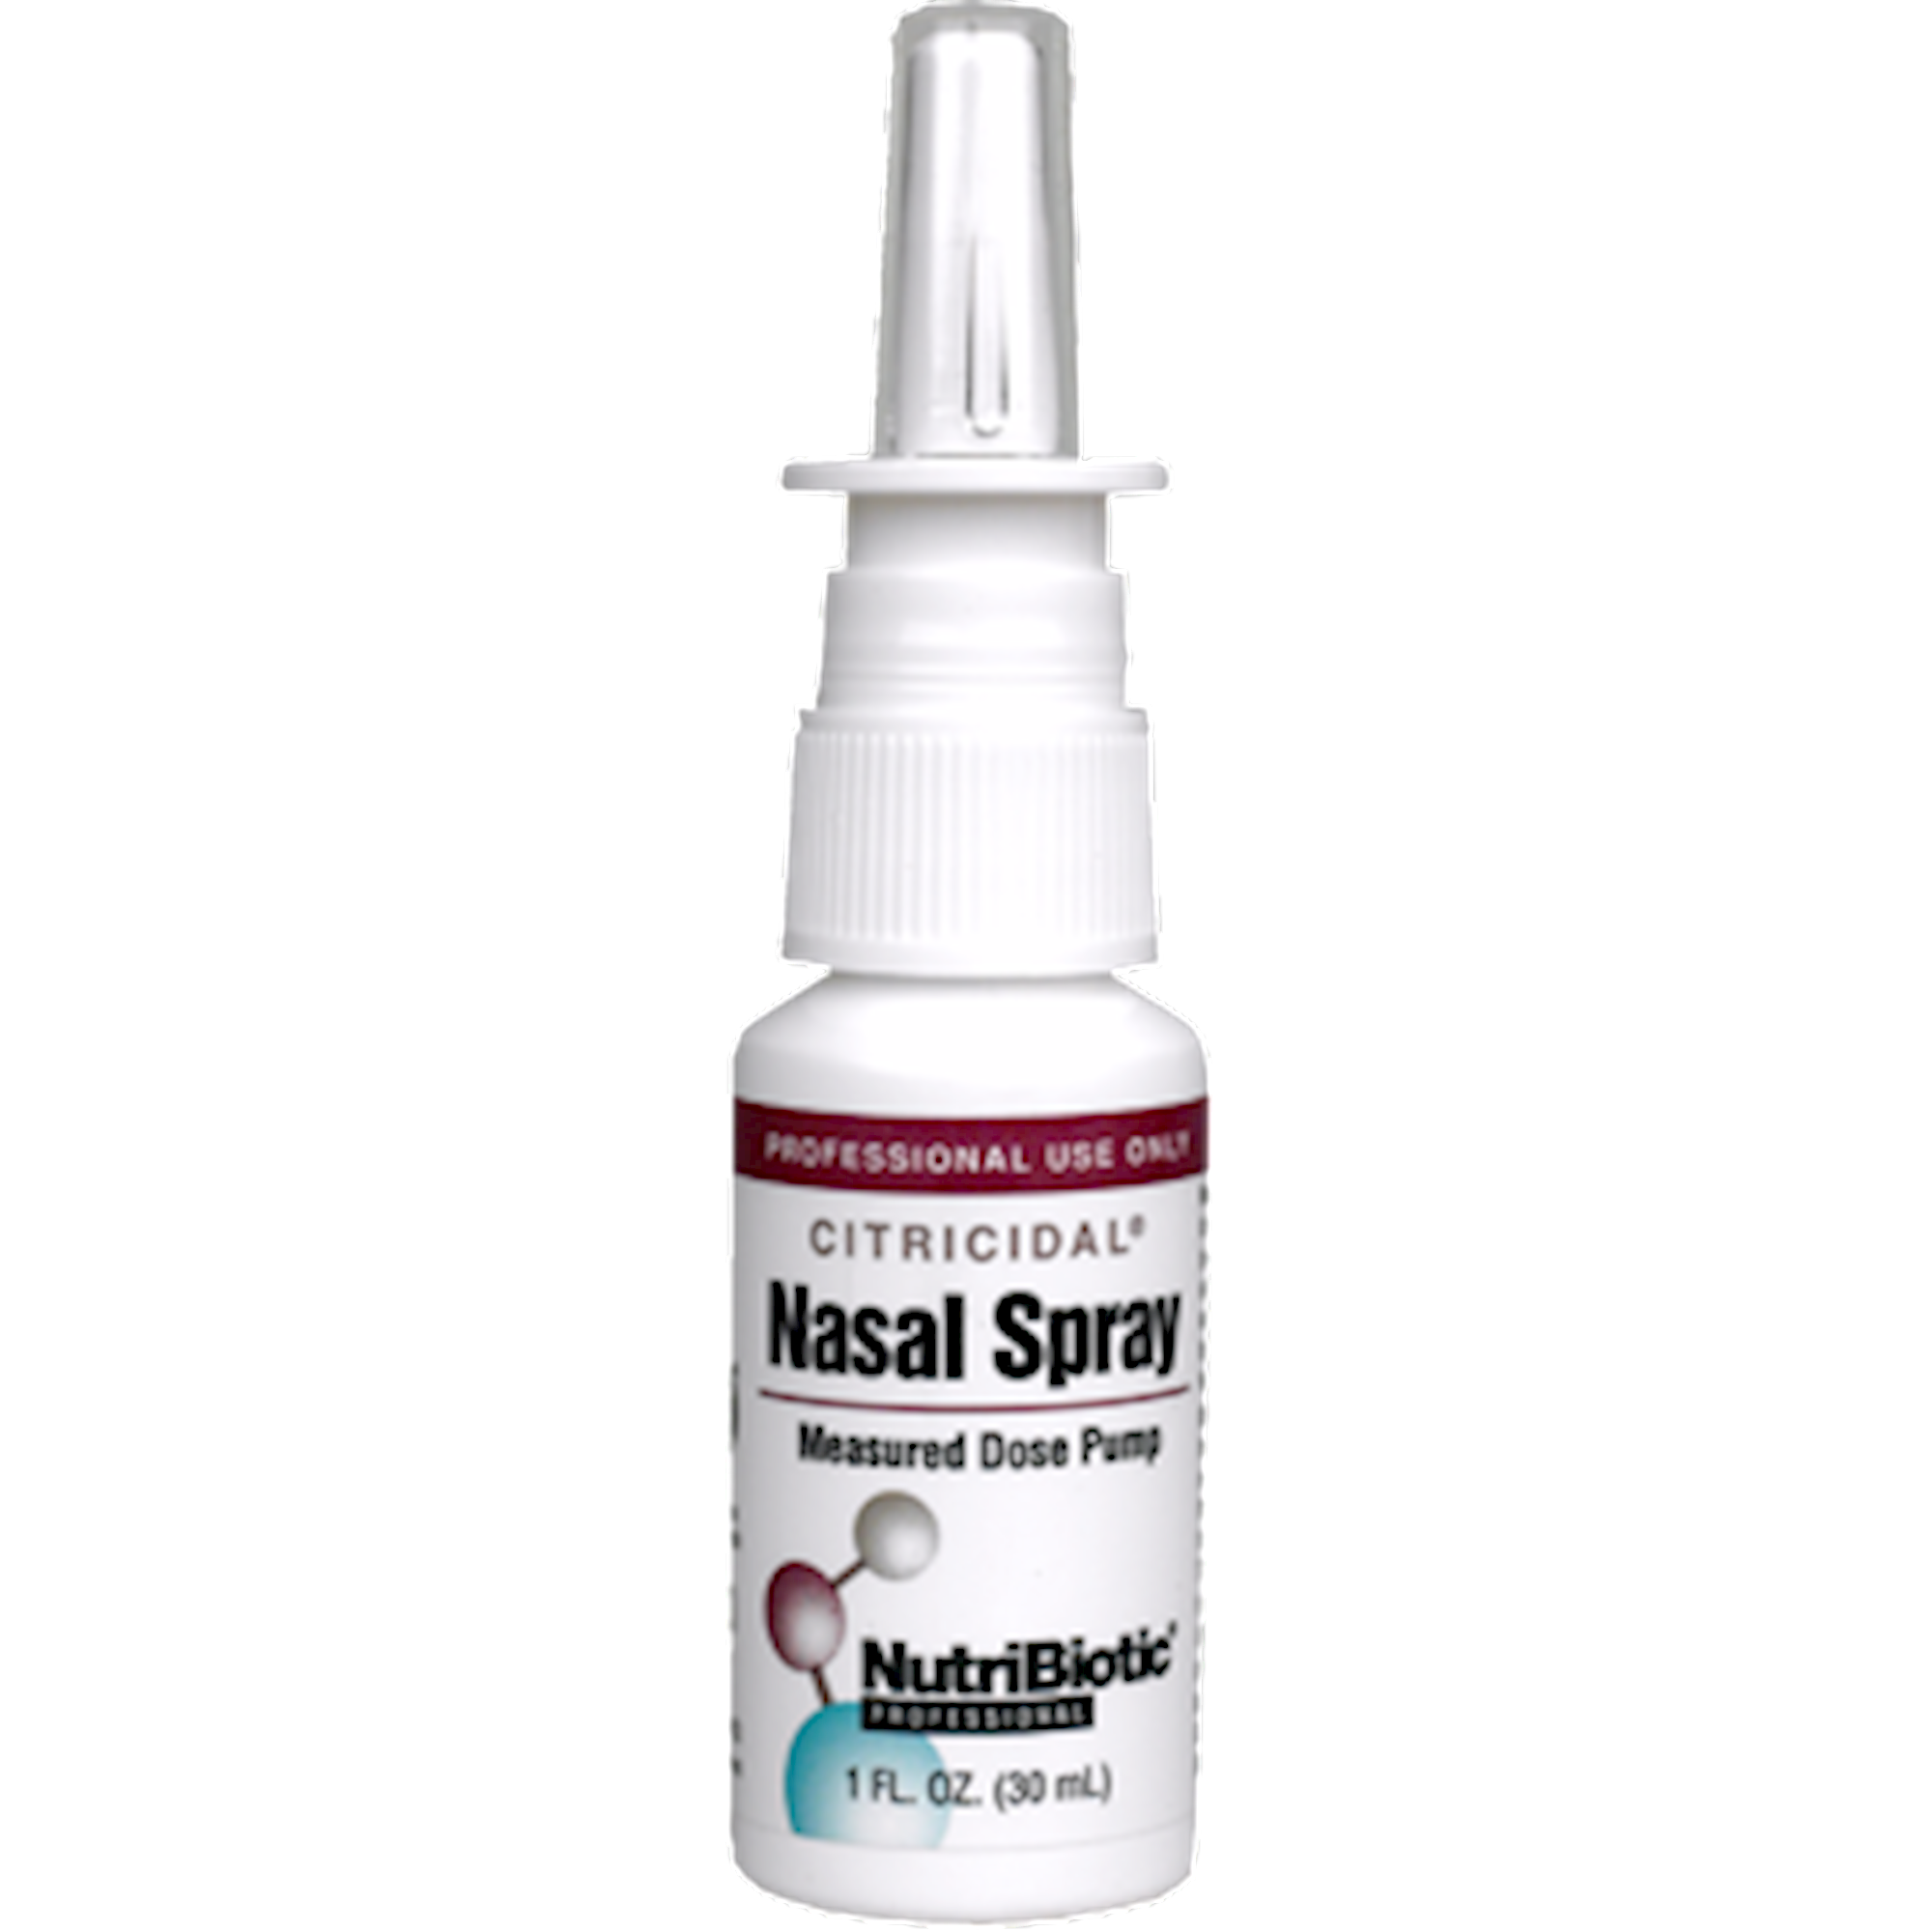 NutriBiotic - Citricidal Nasal Spray - 1 fl oz (30ml) - ePothex